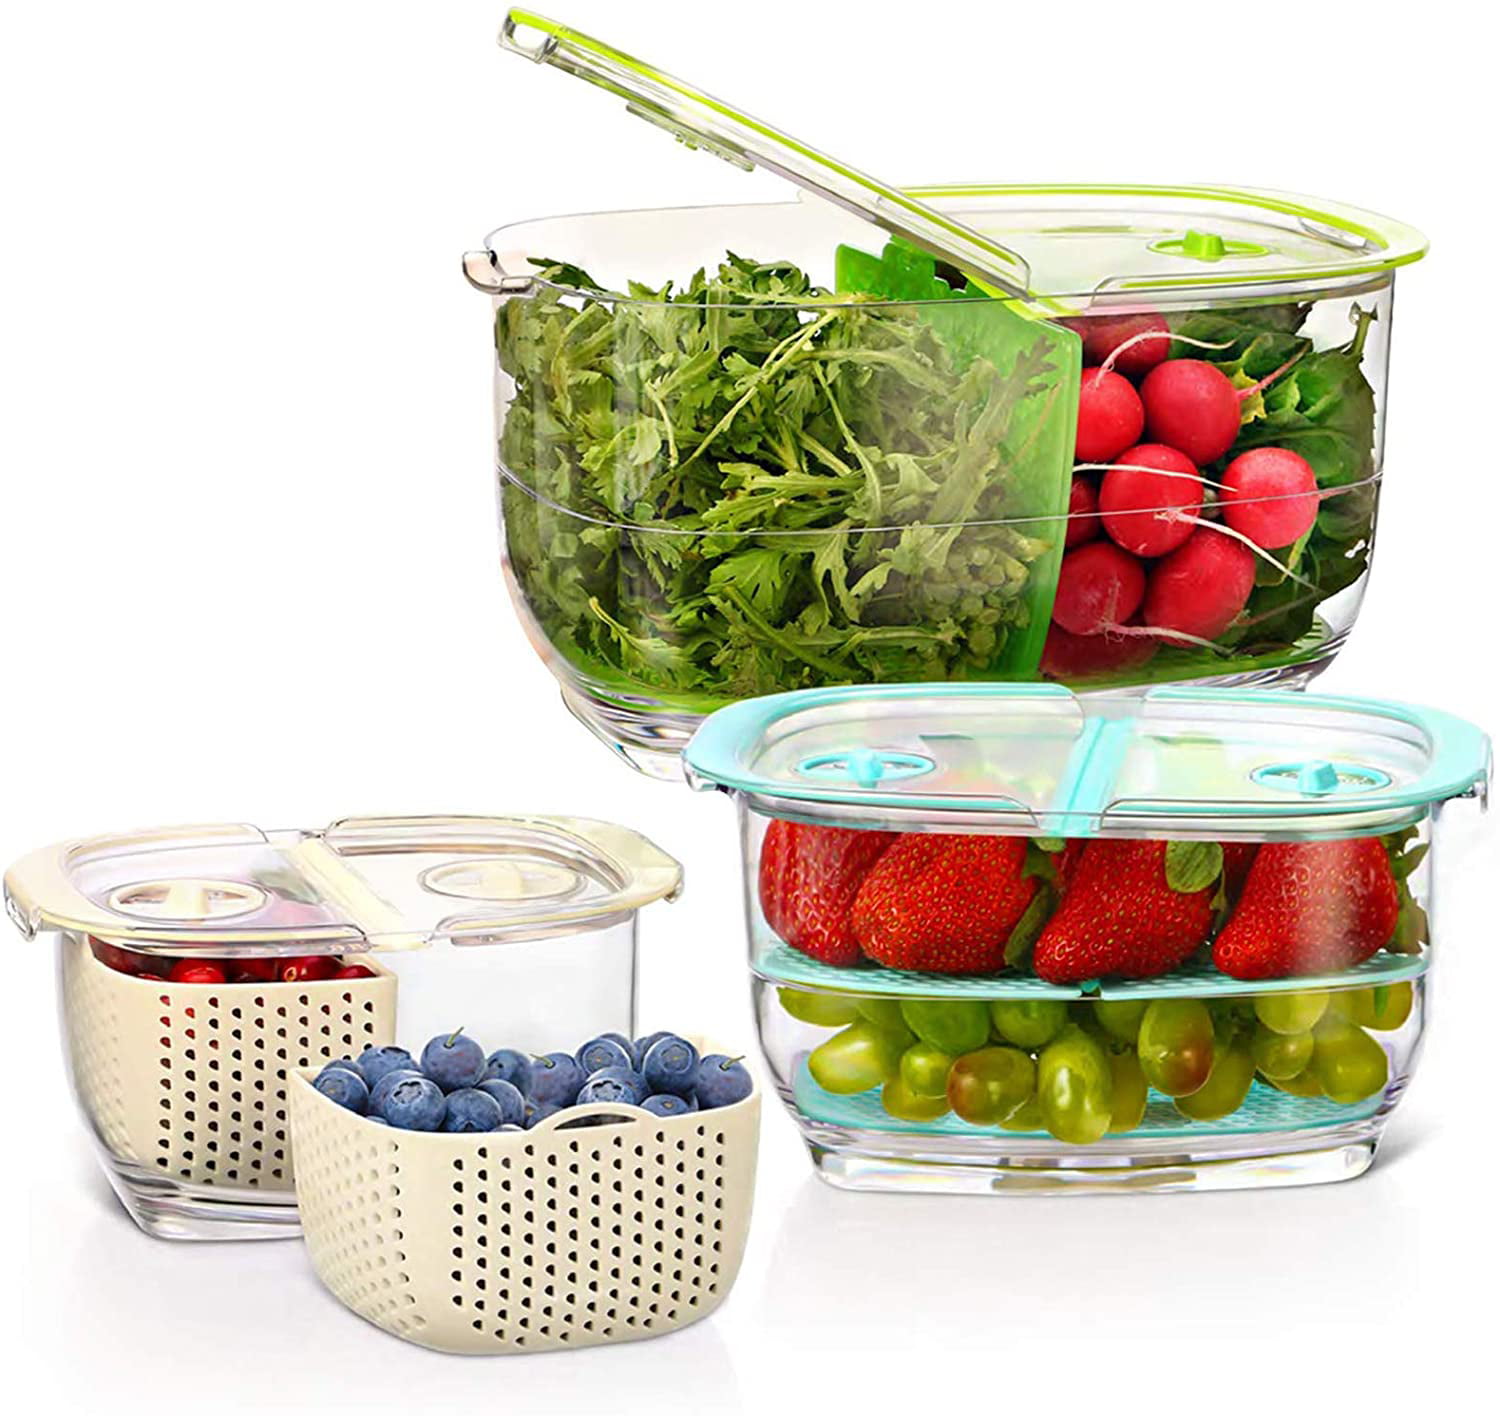 Details about   Creative Kitchen Food Crisper Vegetable Fruit Saver Container Fresh Storage Box 